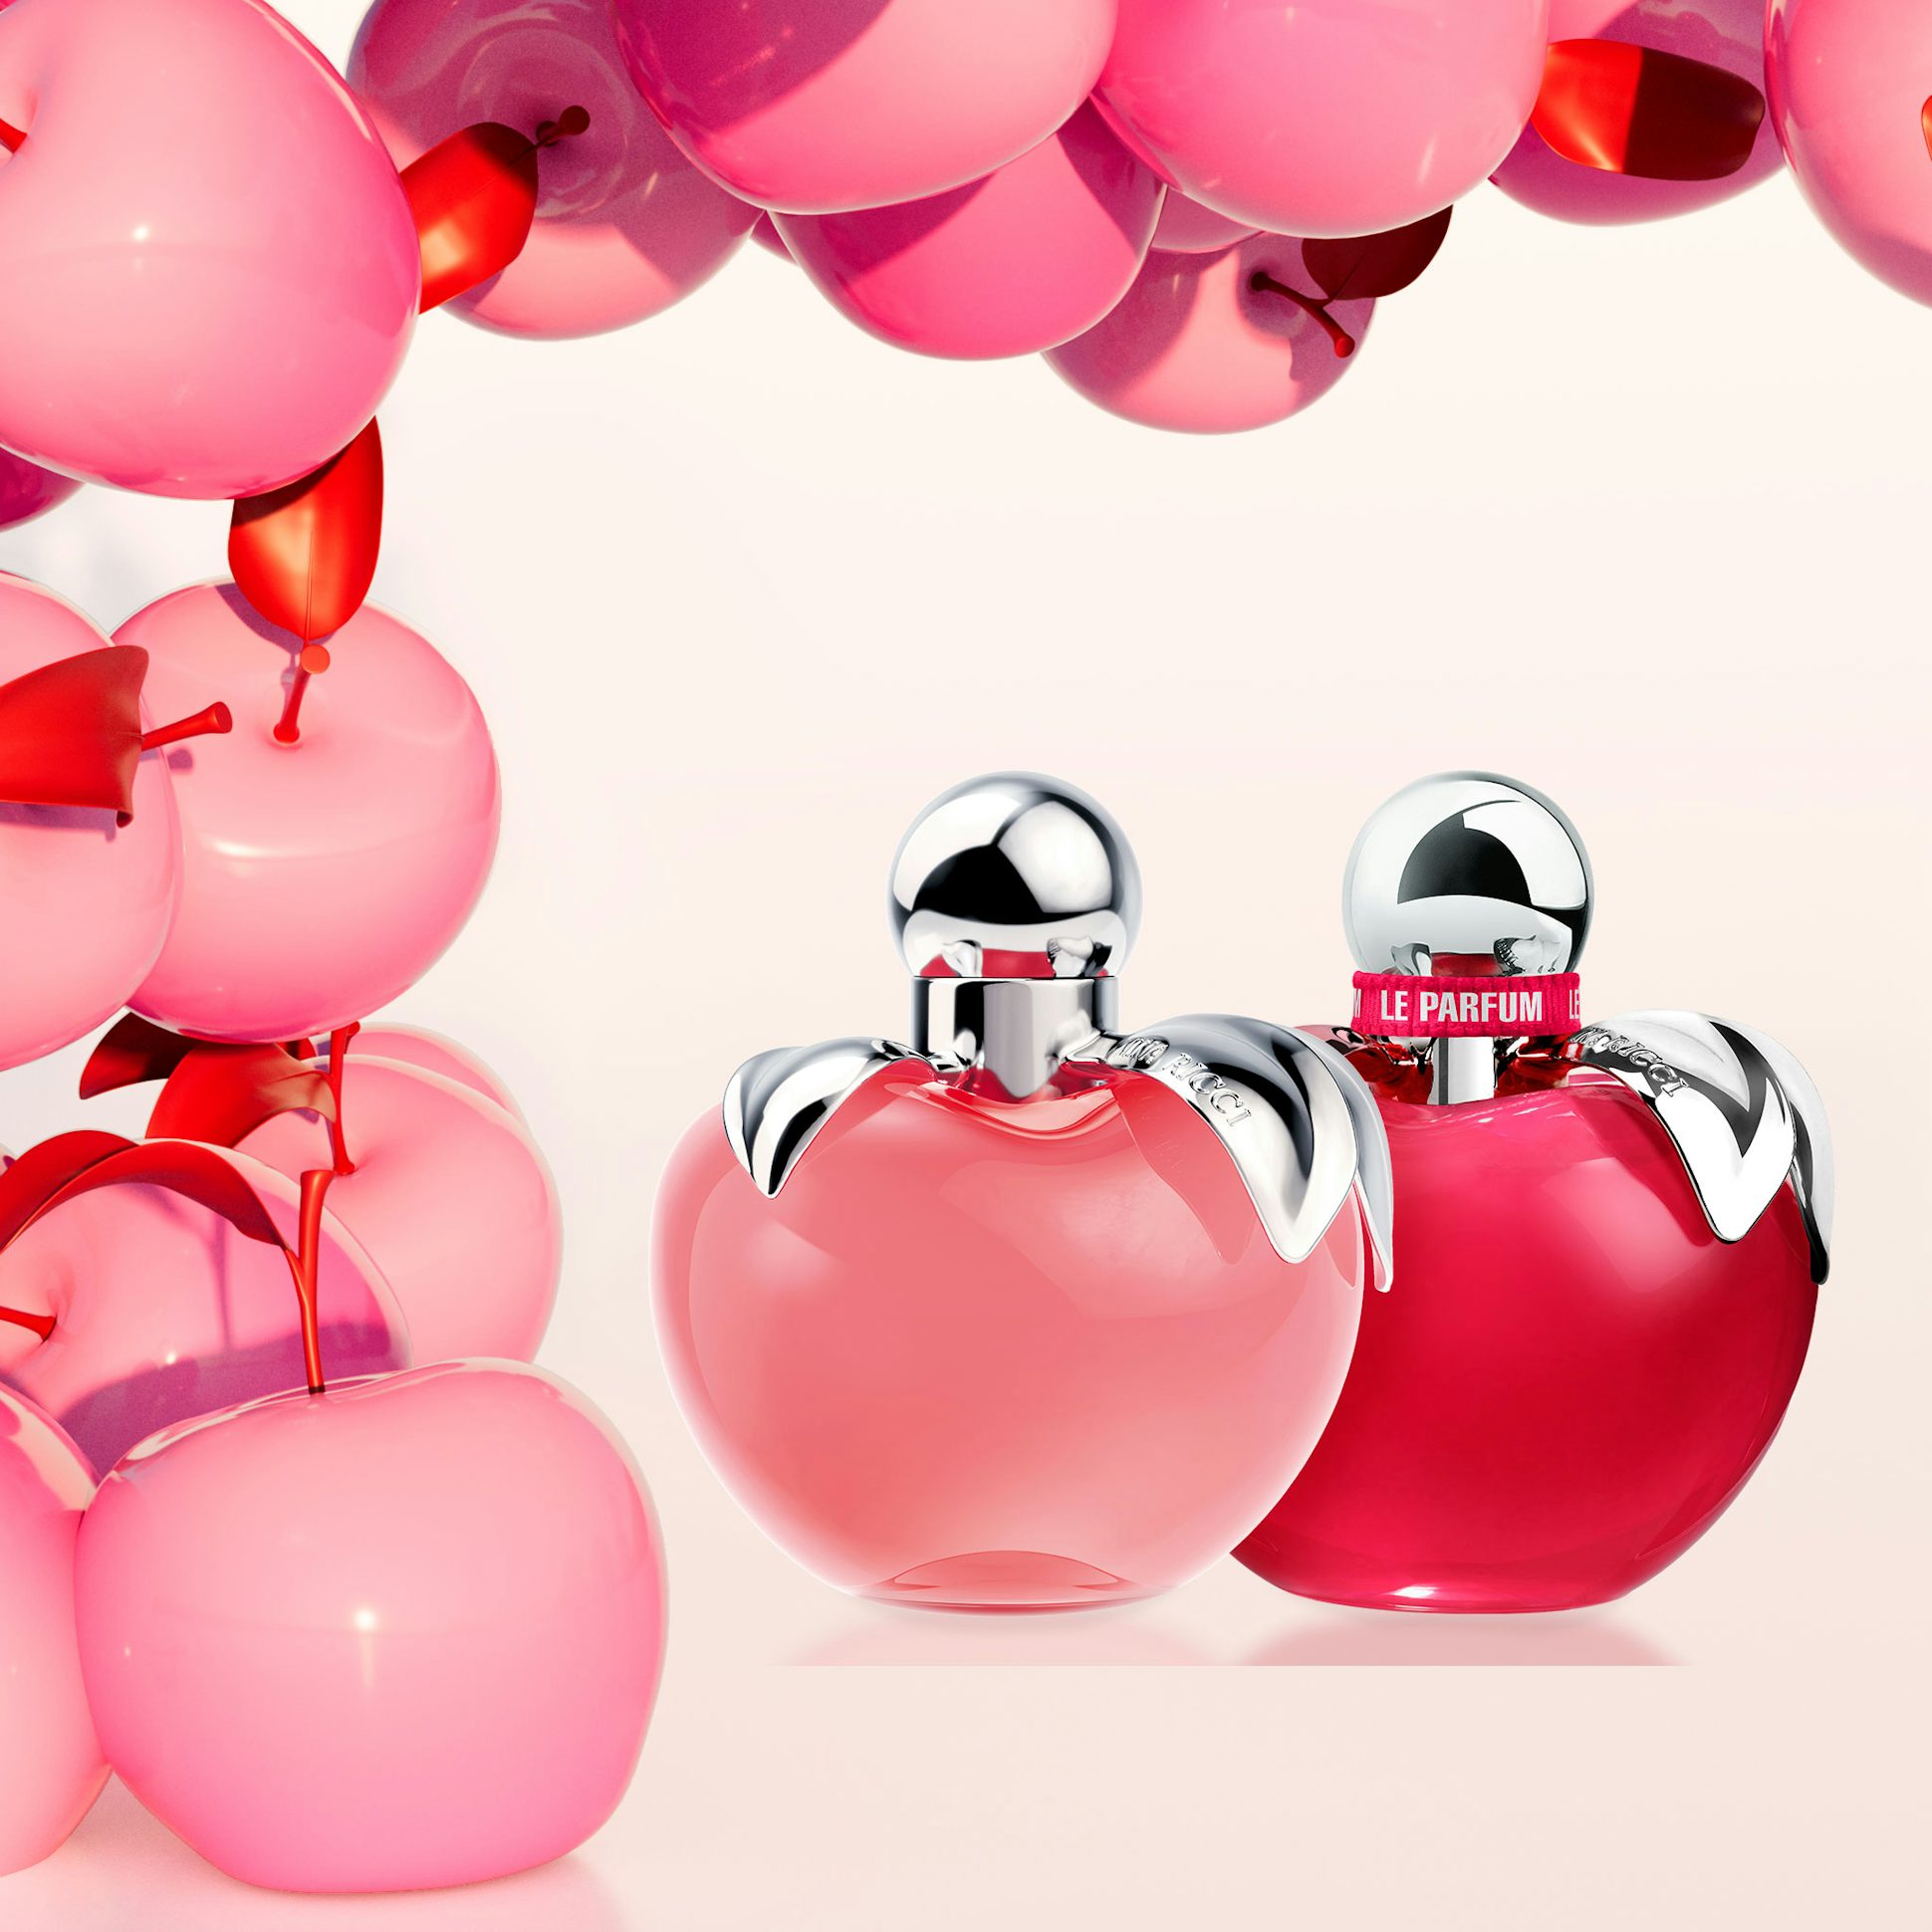 Accumulation of Apple Nina Eau de Toilette & Nina Le Parfum - Nina Ricci